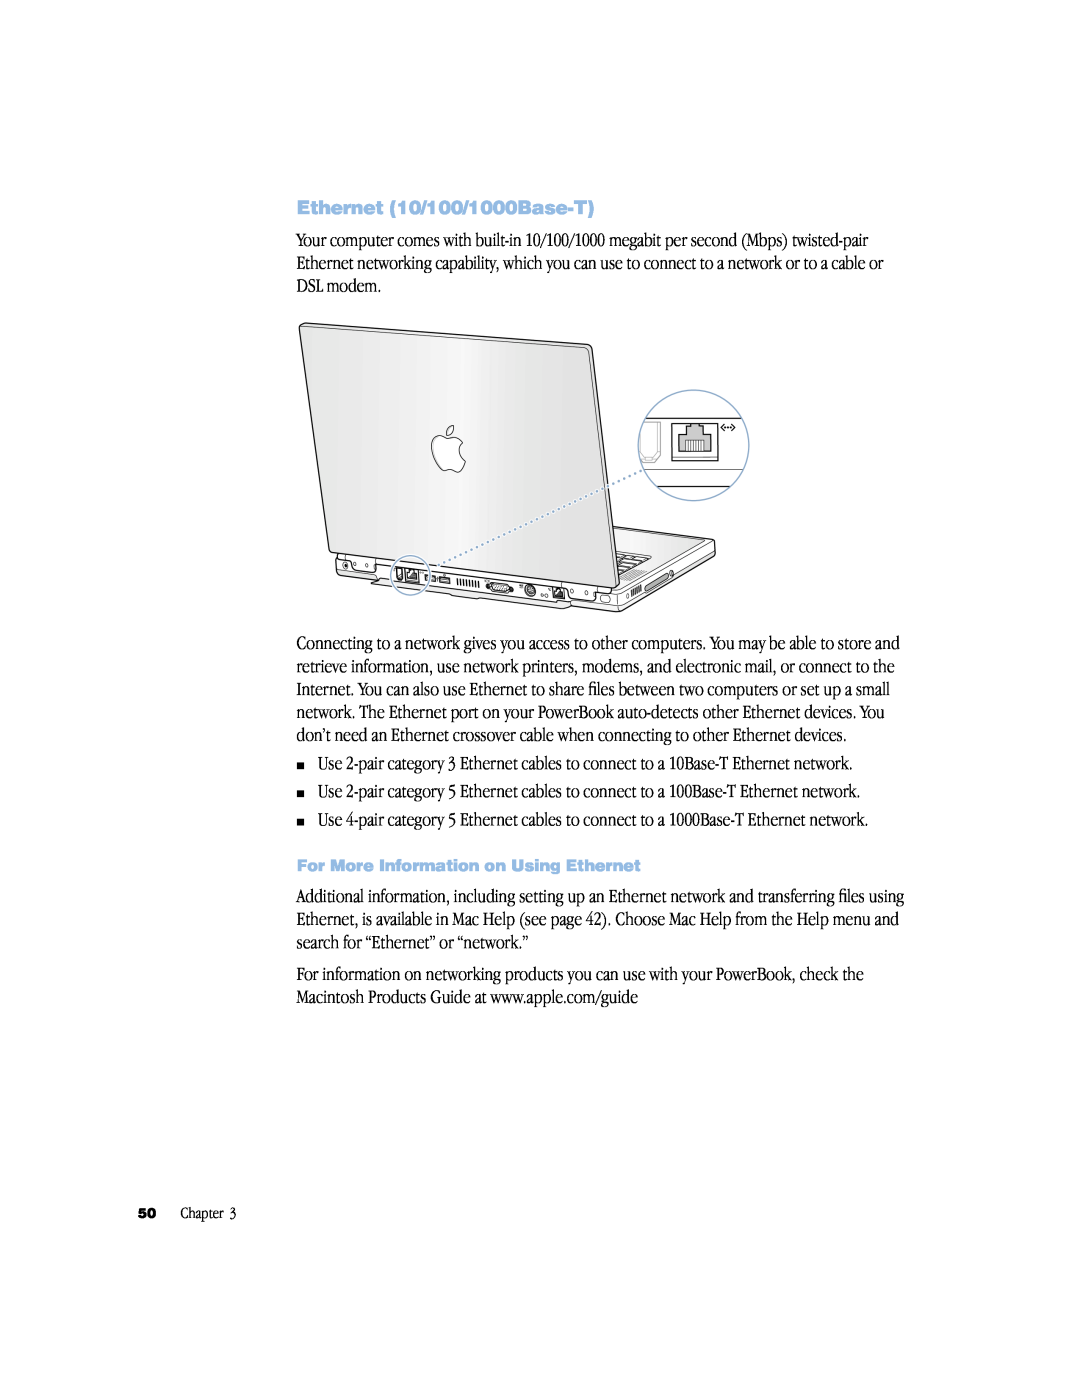 Apple powerbook g4 manual Ethernet 10/100/1000Base-T, For More Information on Using Ethernet 